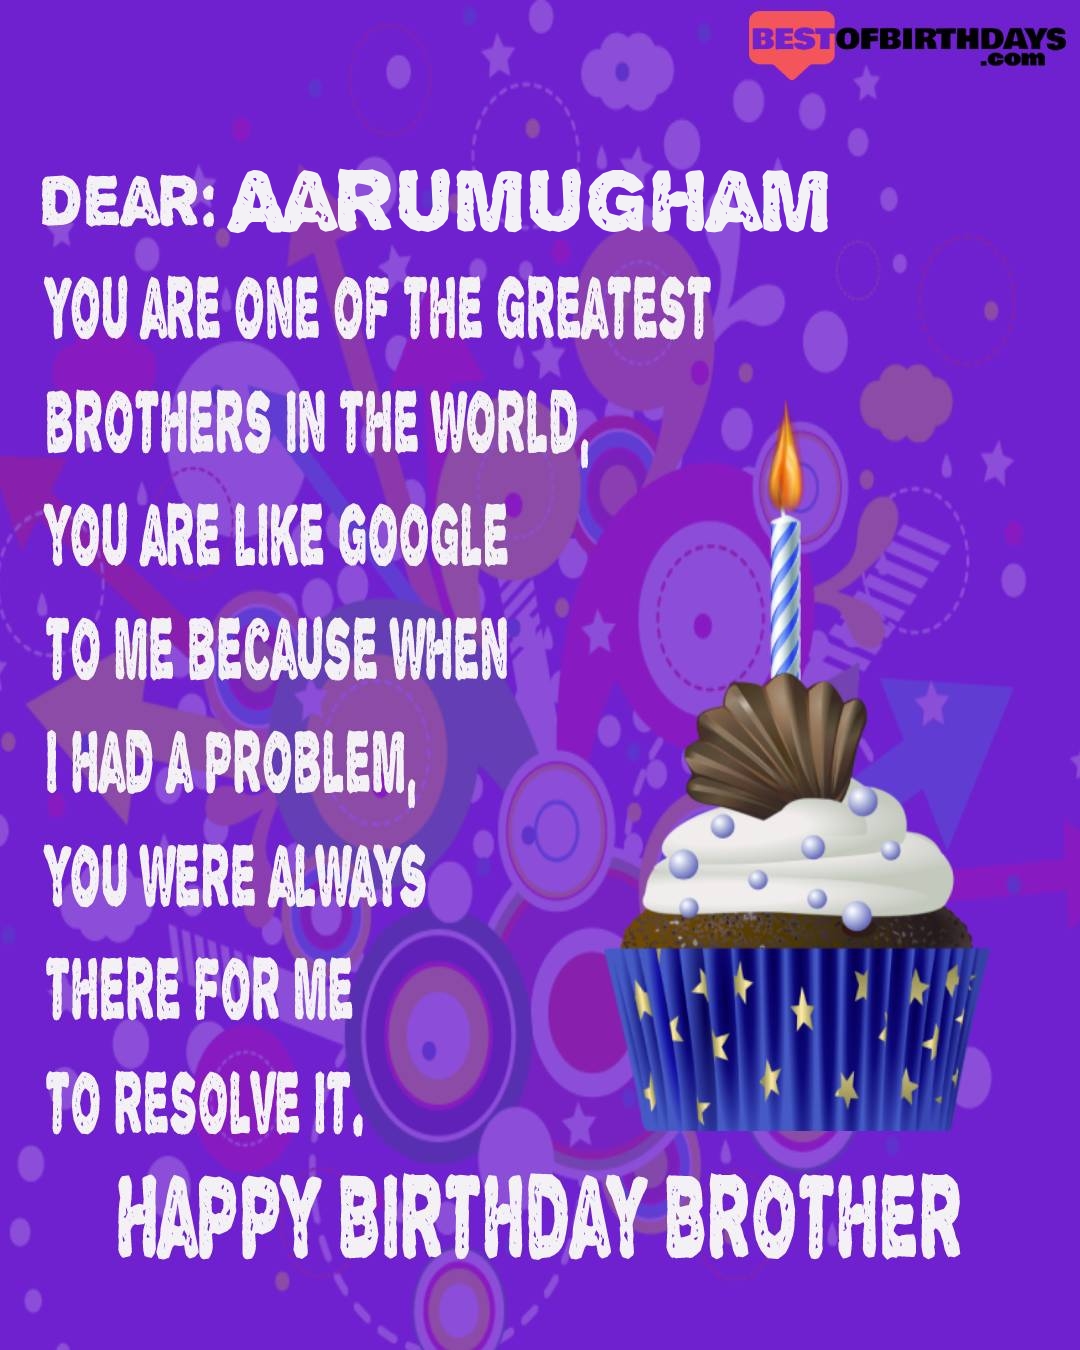 Happy birthday aarumugham bhai brother bro